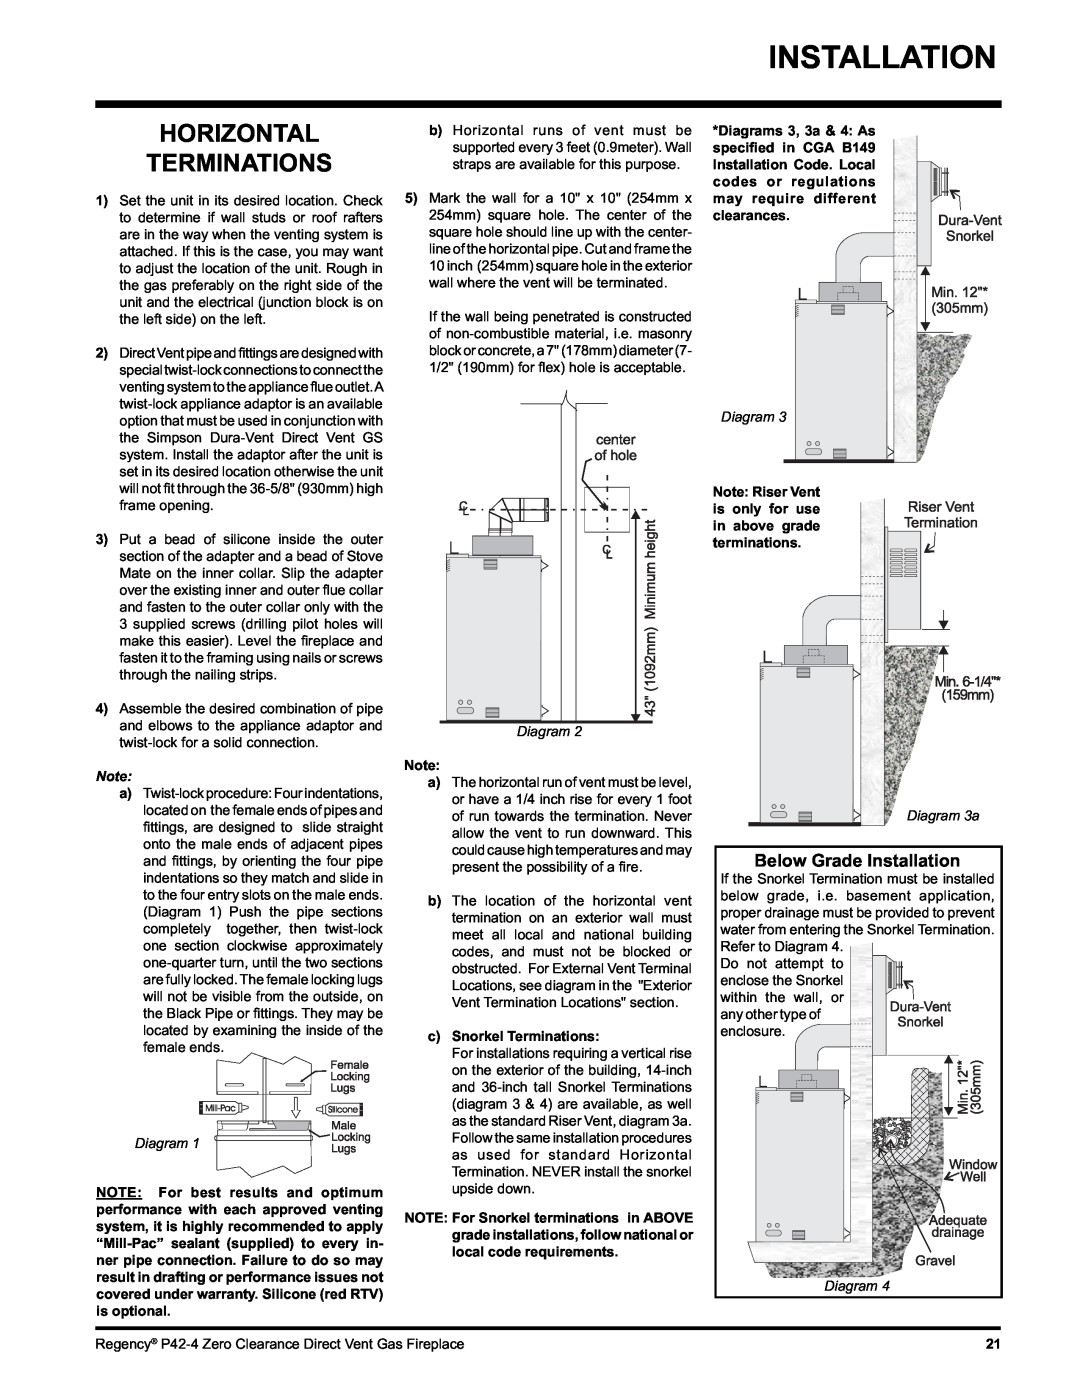 Regency P42-LP4, P42-NG4 installation manual Horizontal Terminations, cSnorkel Terminations, Diagram 3a 